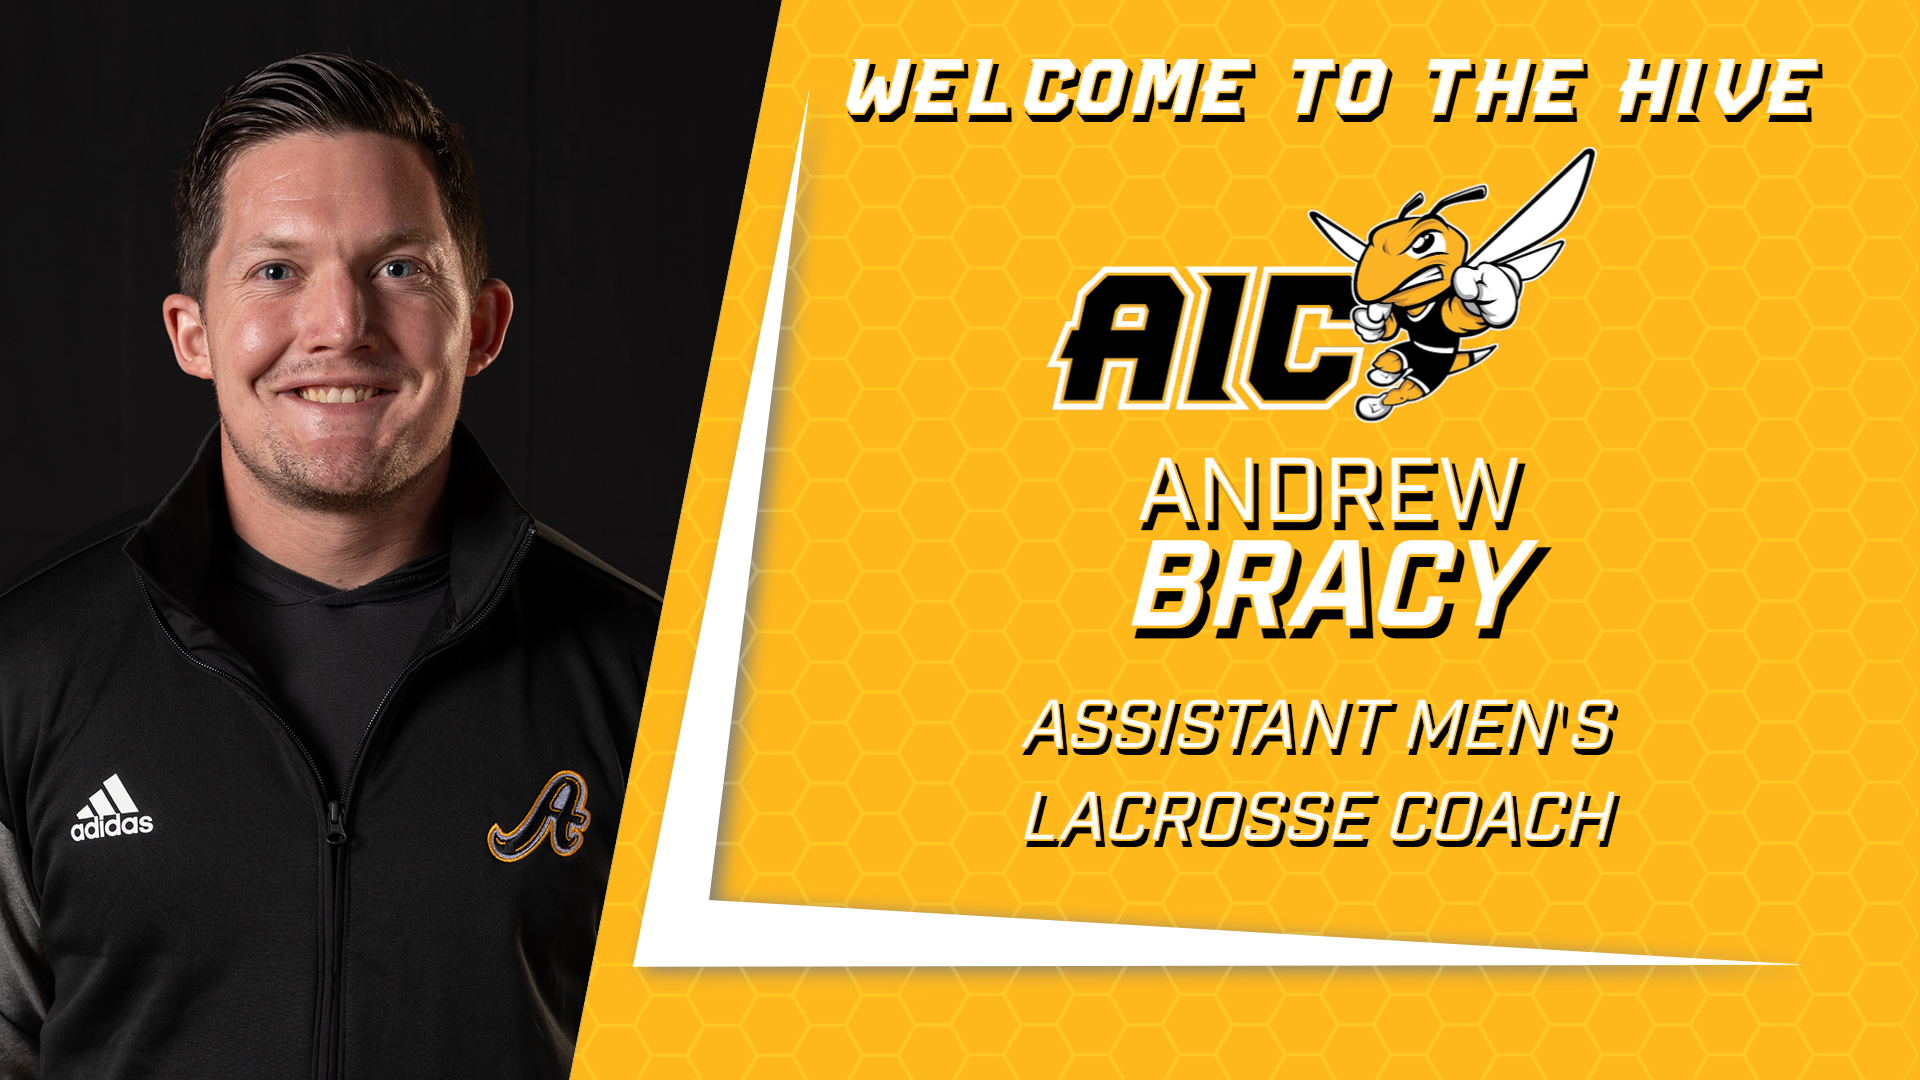 Bracy named men's lacrosse assistant coach